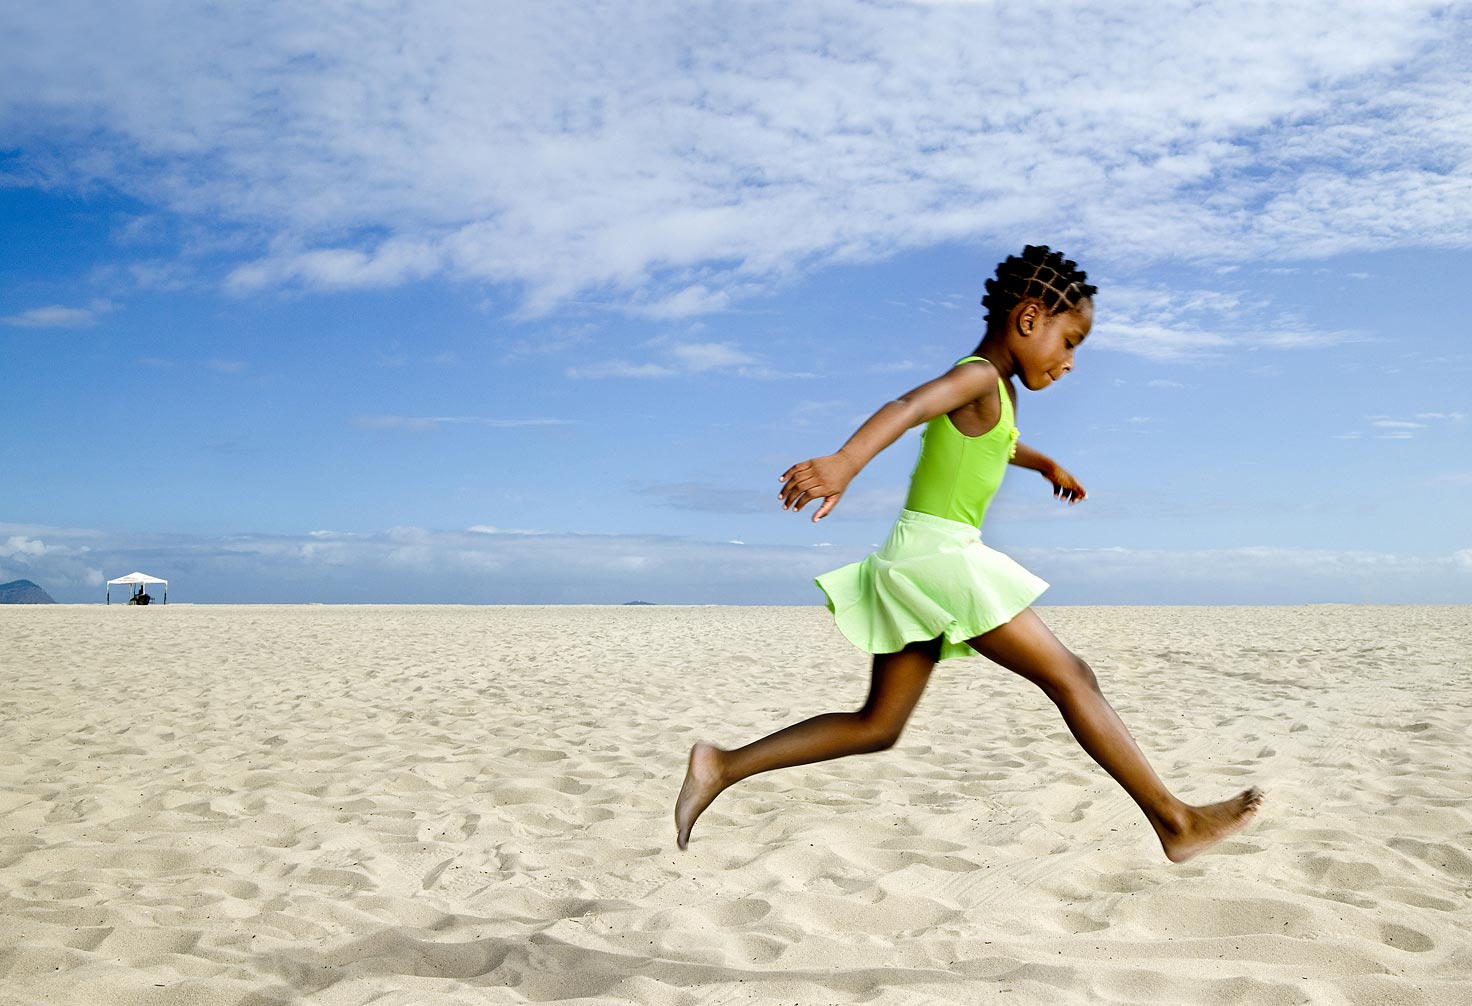 joSon childhood-Girl jumping at the beach